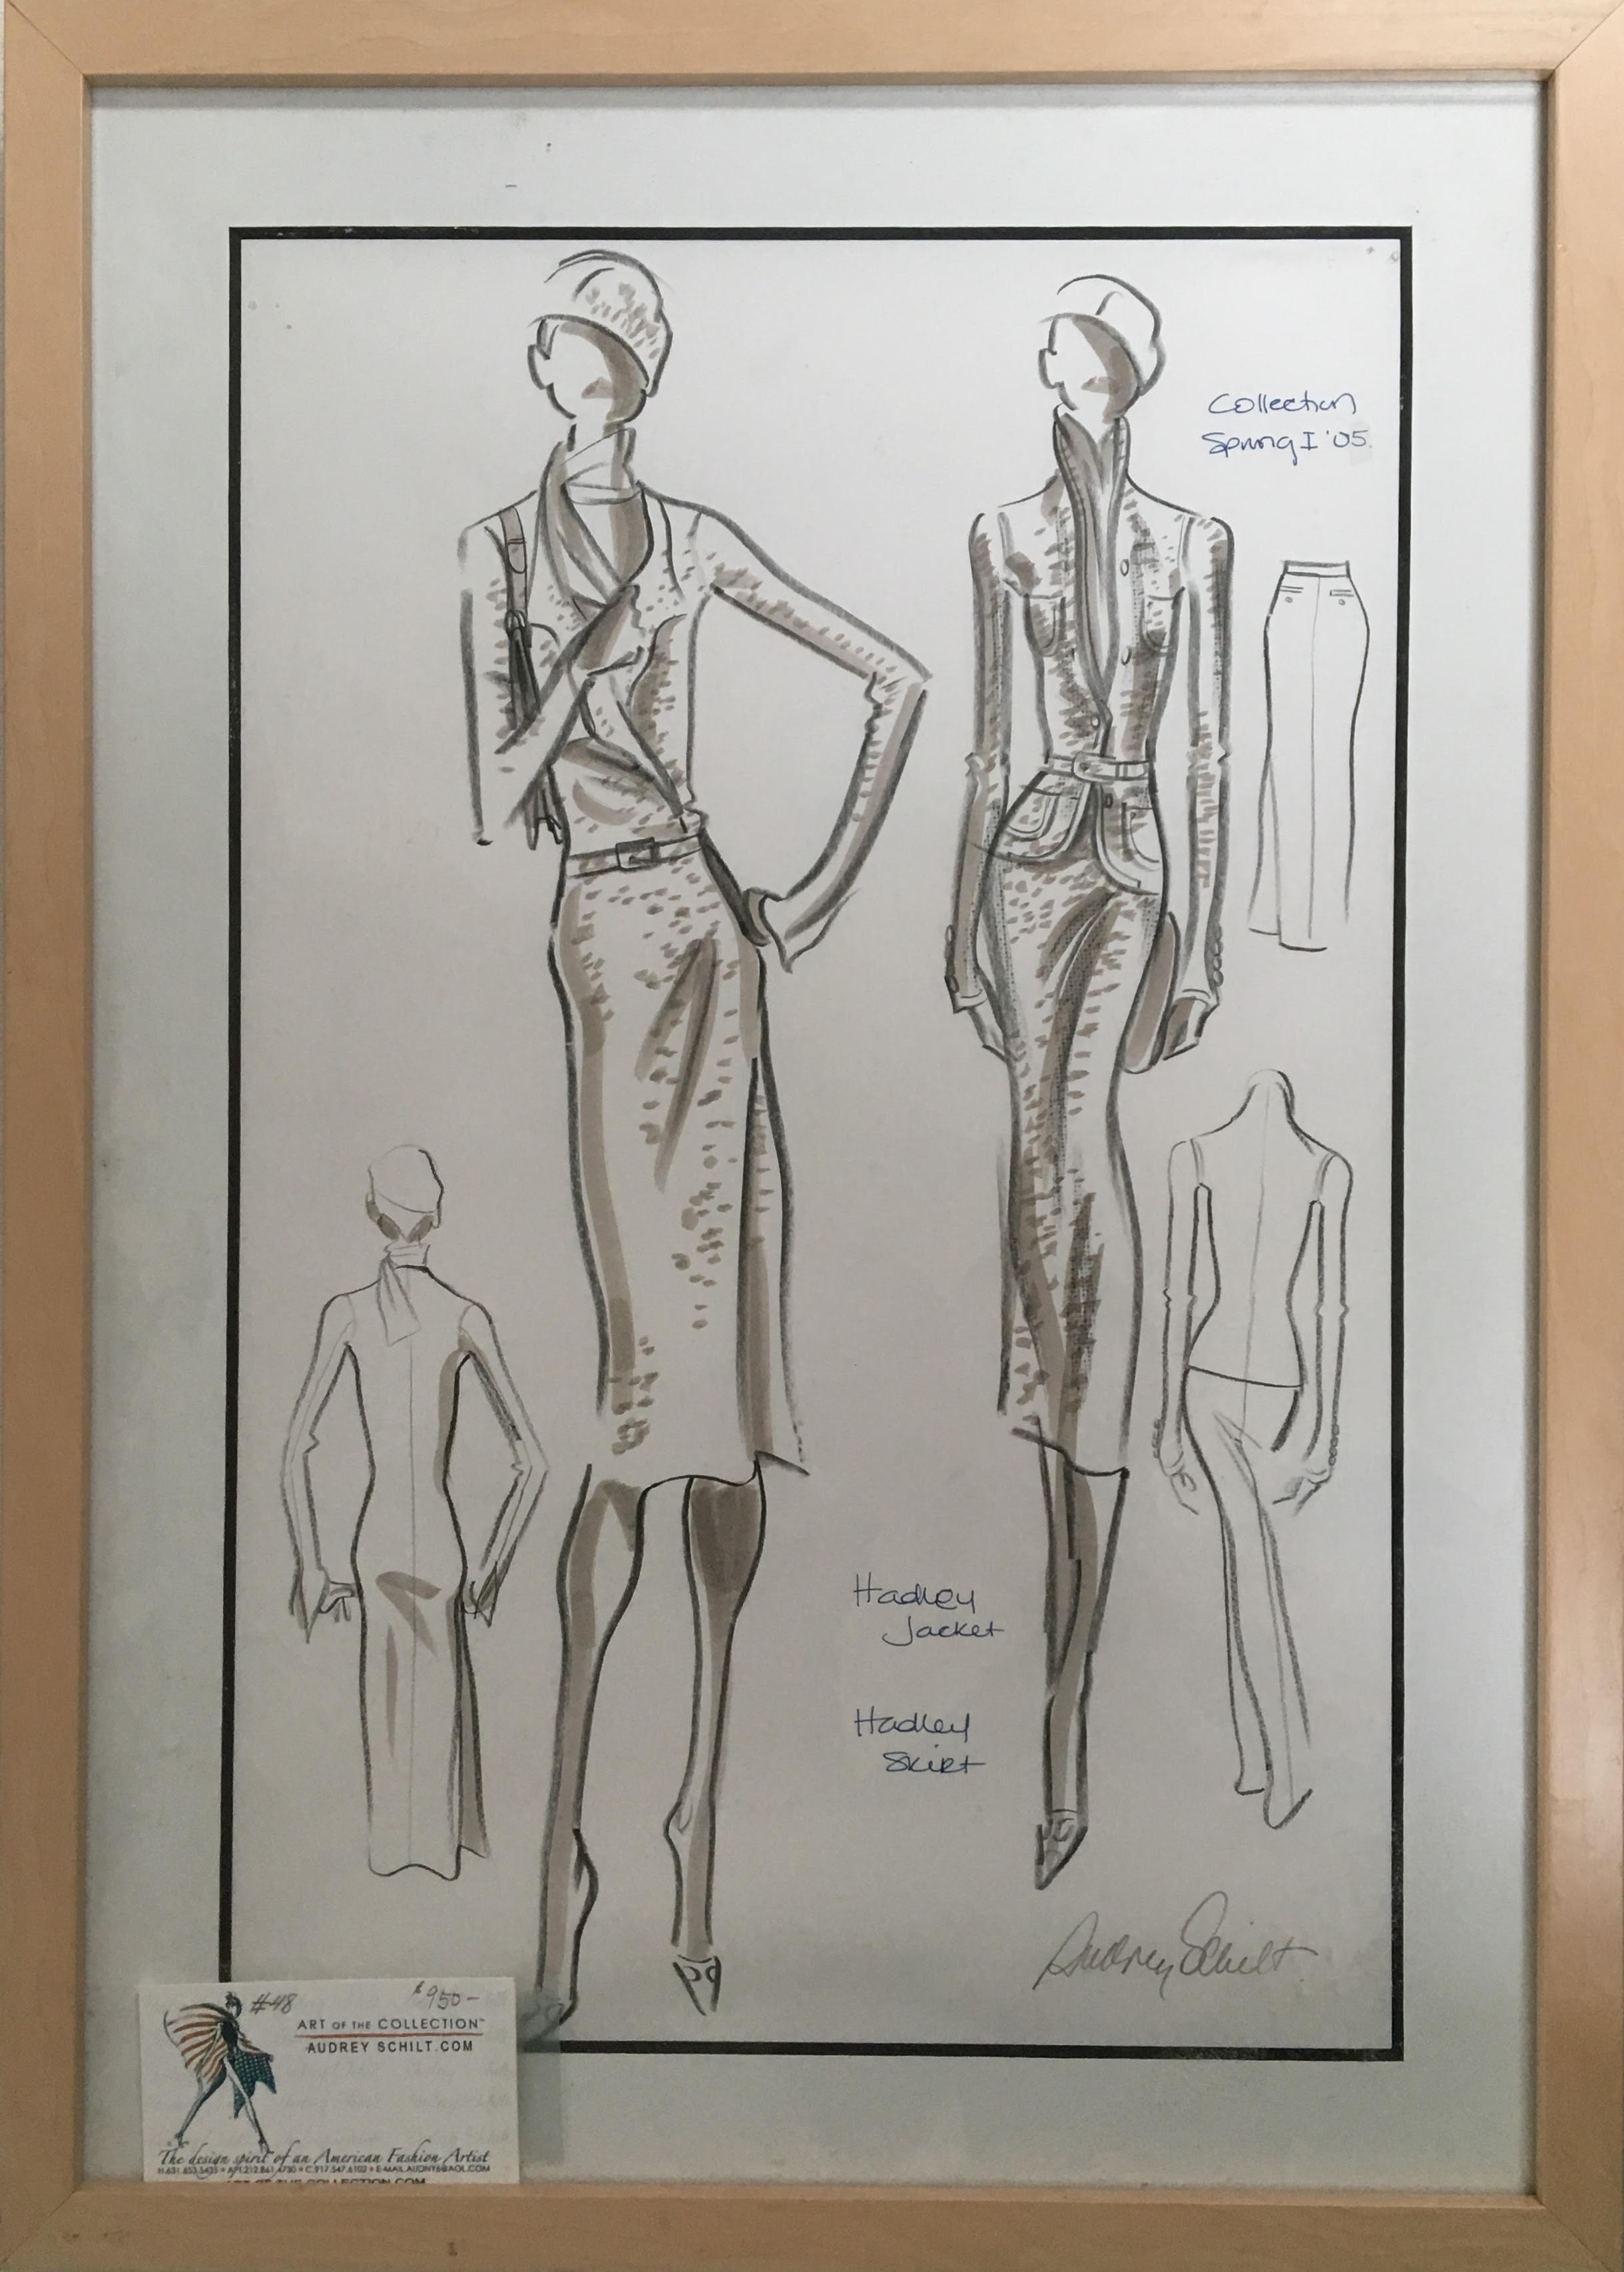 "Ralph Lauren, Spring '05 Hadley Jacket and Skirt"